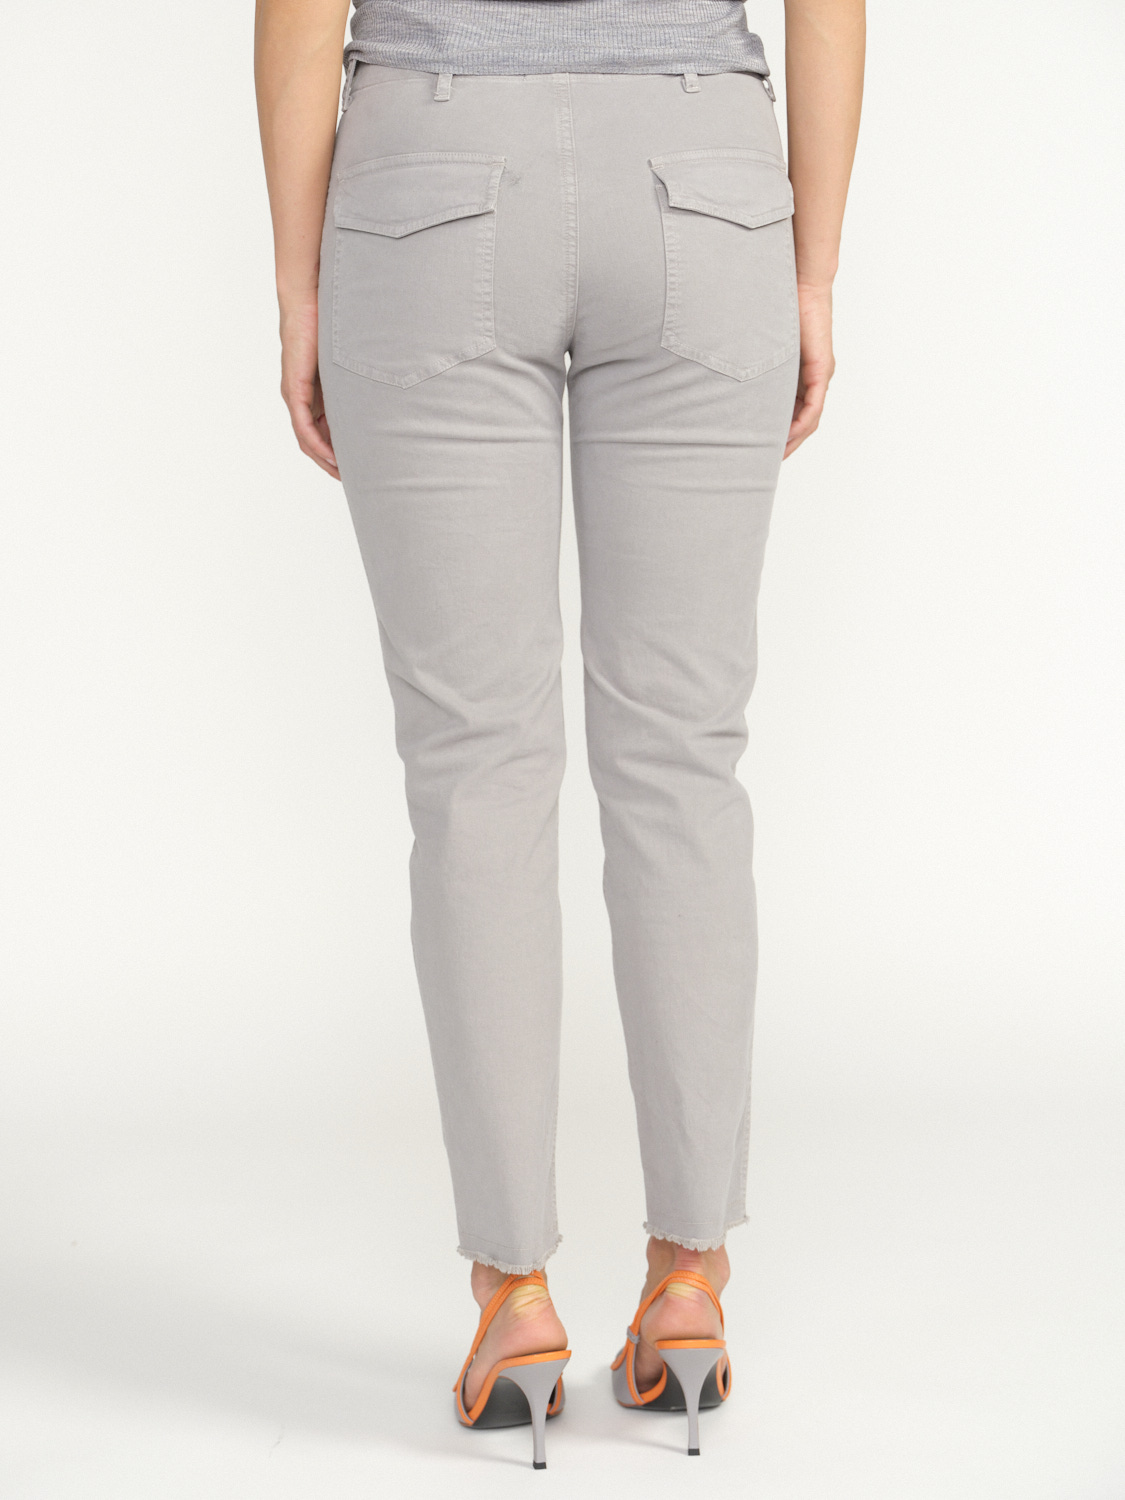 Nili Lotan Jenna Pant - Pants with large pockets  grey 34